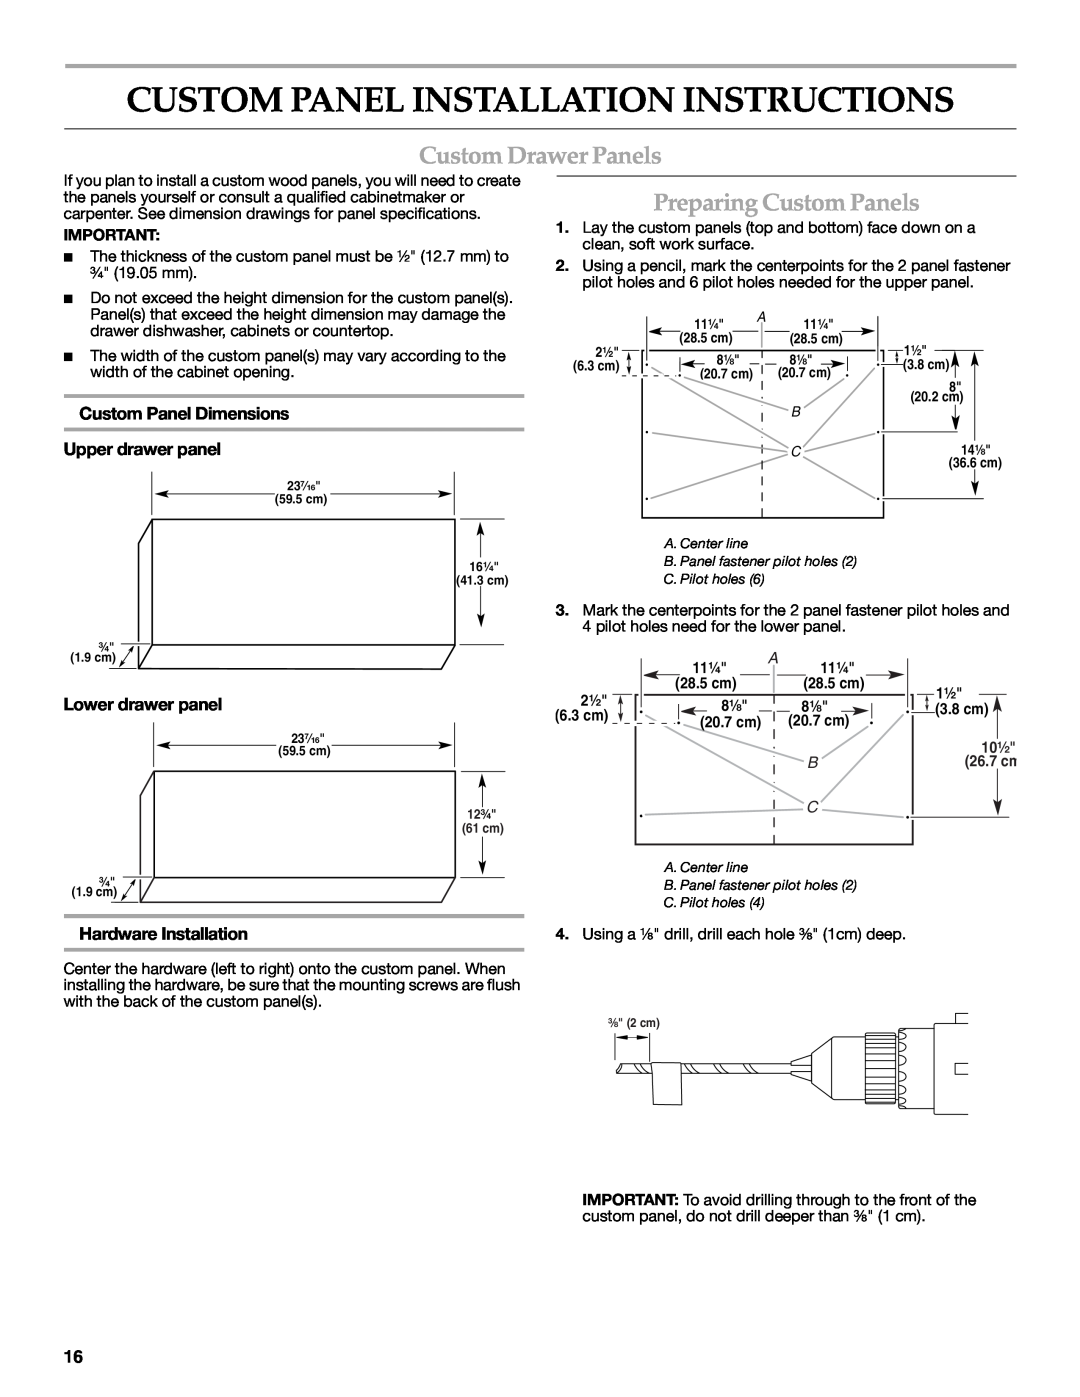 KitchenAid W10216167A Custom Panel Installation Instructions, Custom Drawer Panels, Preparing Custom Panels, 11¹⁄₄, 2¹⁄₂ 